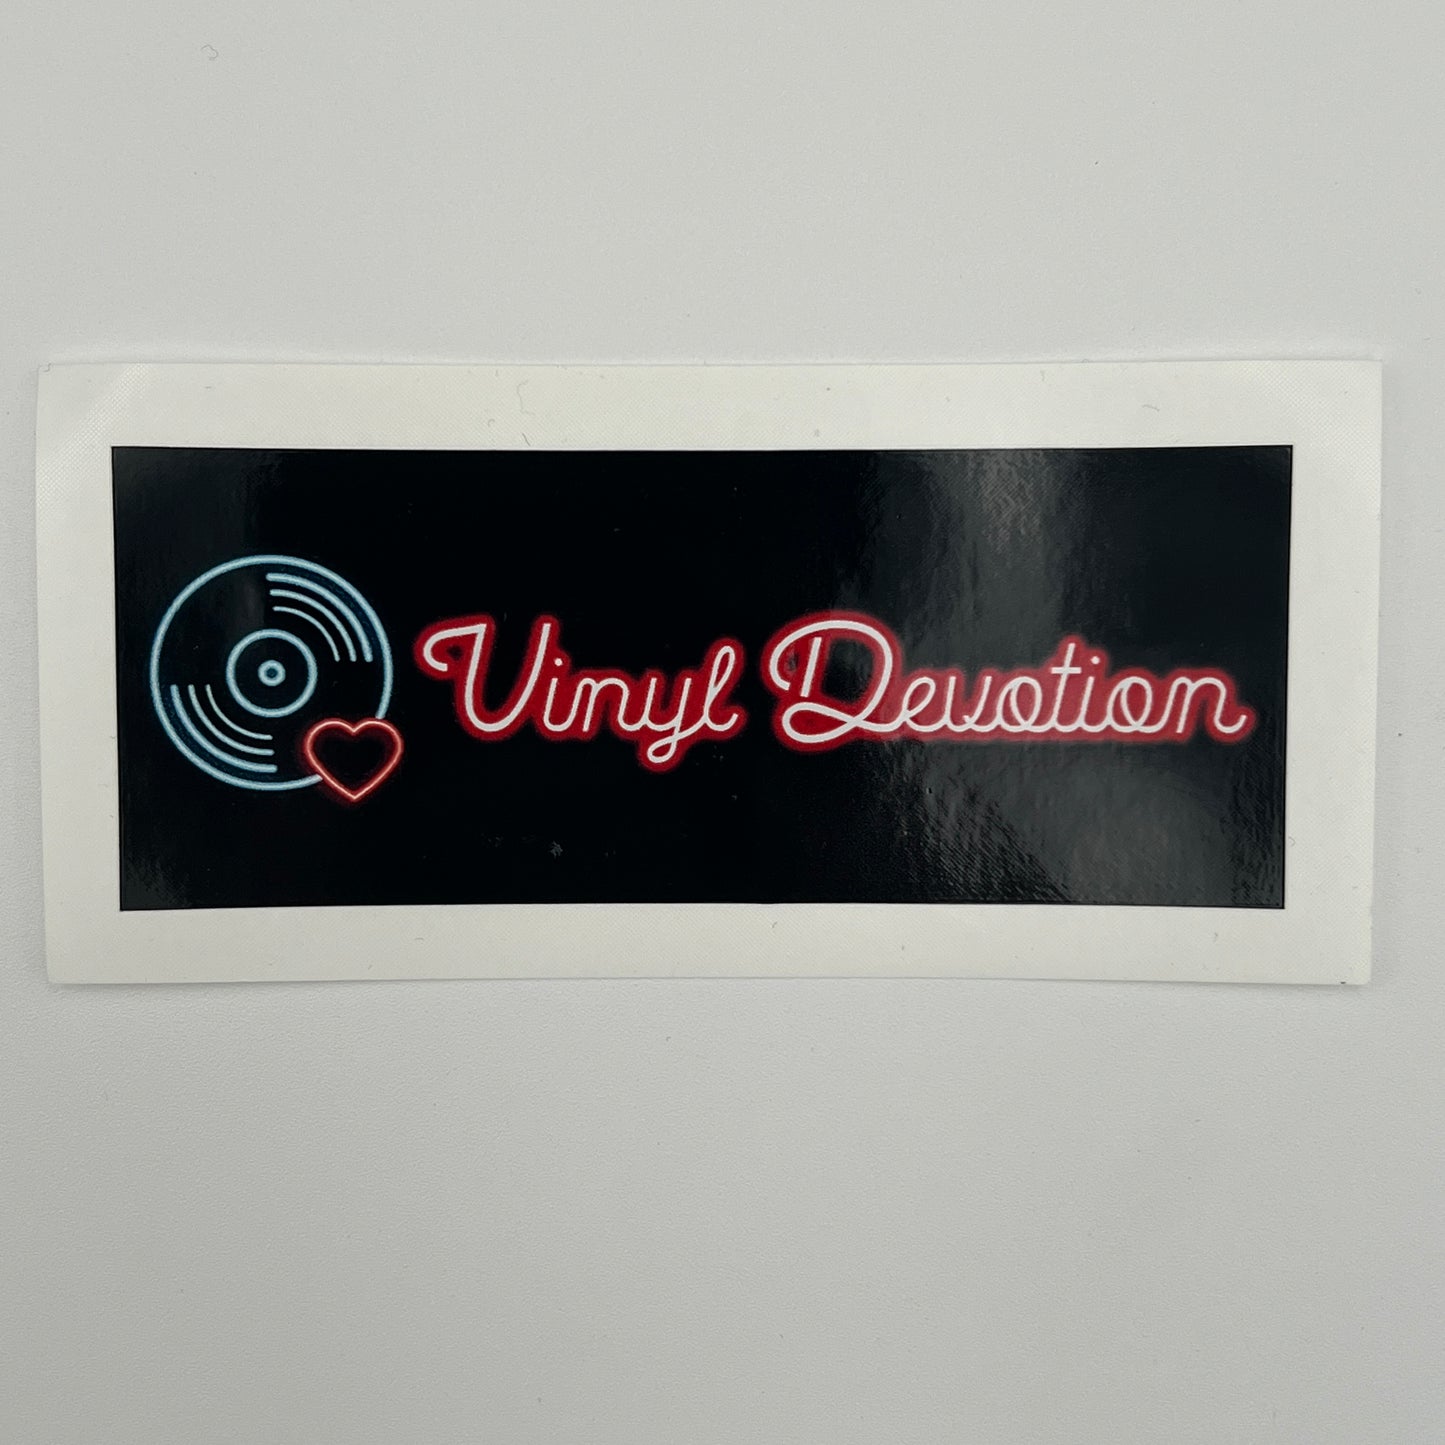 Vinyl Devotion Name Logo Sticker